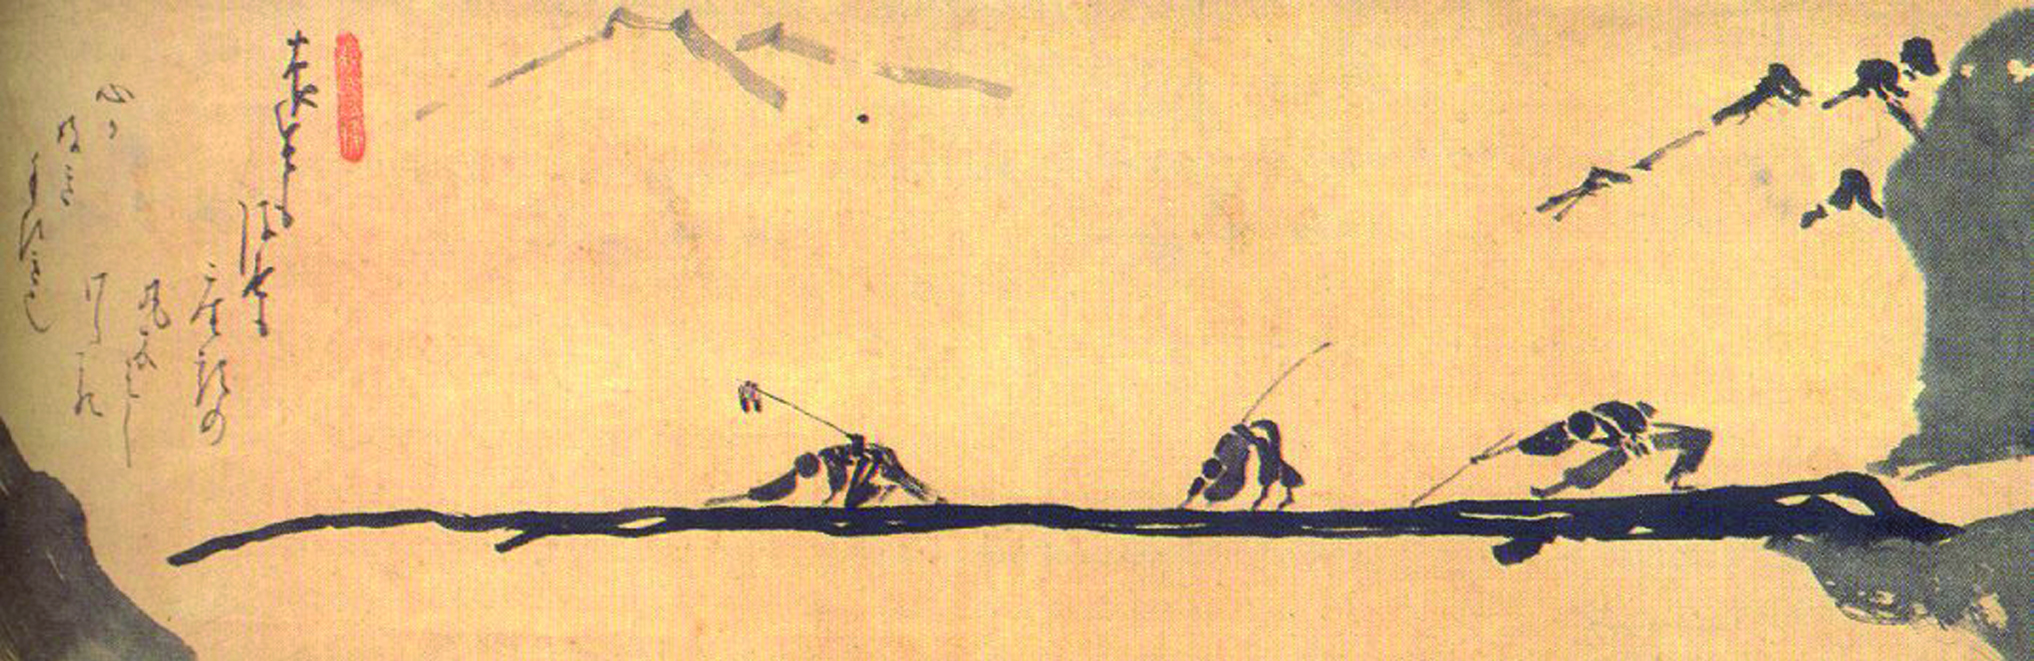 Первая в роду последняя глава. Хакуин Экаку. Хакуин Экаку картины. Дзэн-мастер Хакуин. Японская живопись дзен.